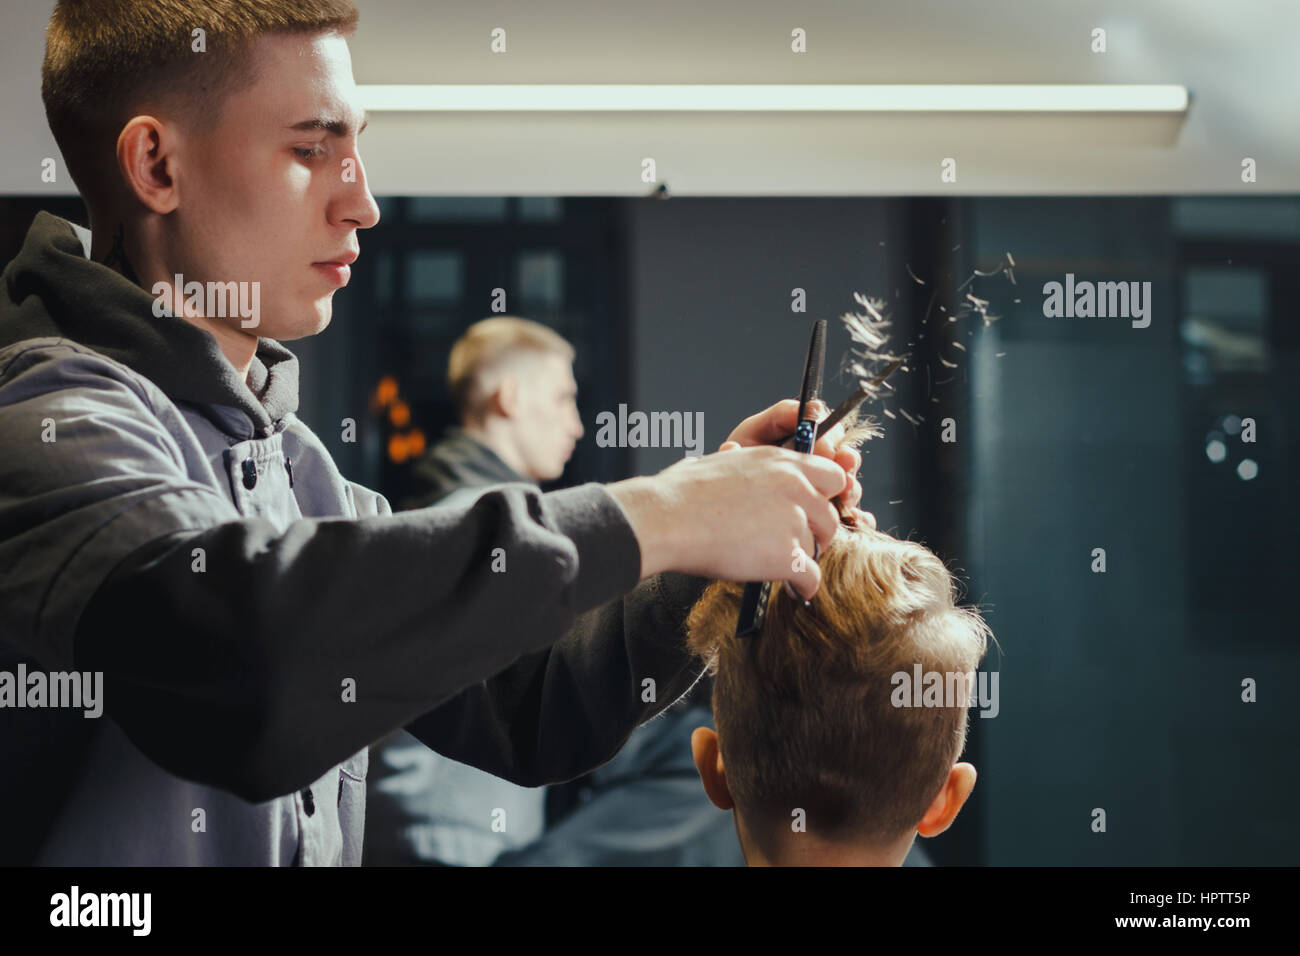 Little Boy Getting Haircut By Barber. Barbershop Theme Stock Photo